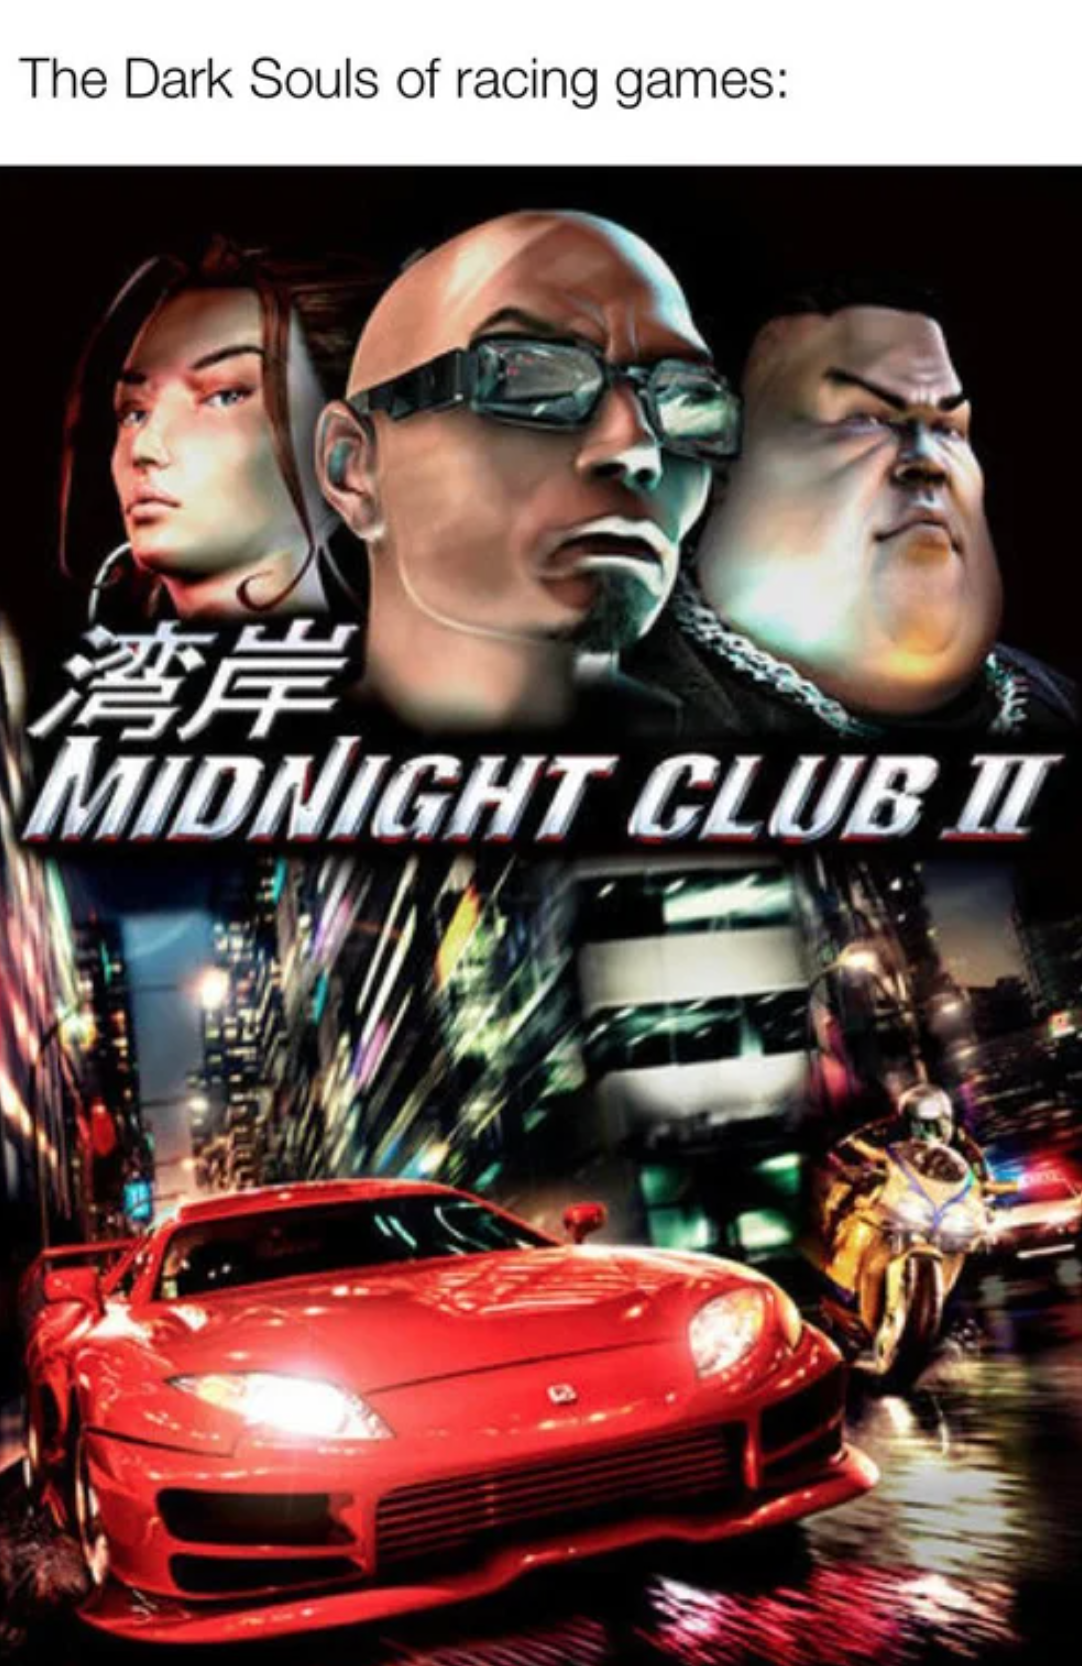 funny gaming memes - midnight club ii manual xbox - The Dark Souls of racing games 12 Tidnight Club Ii